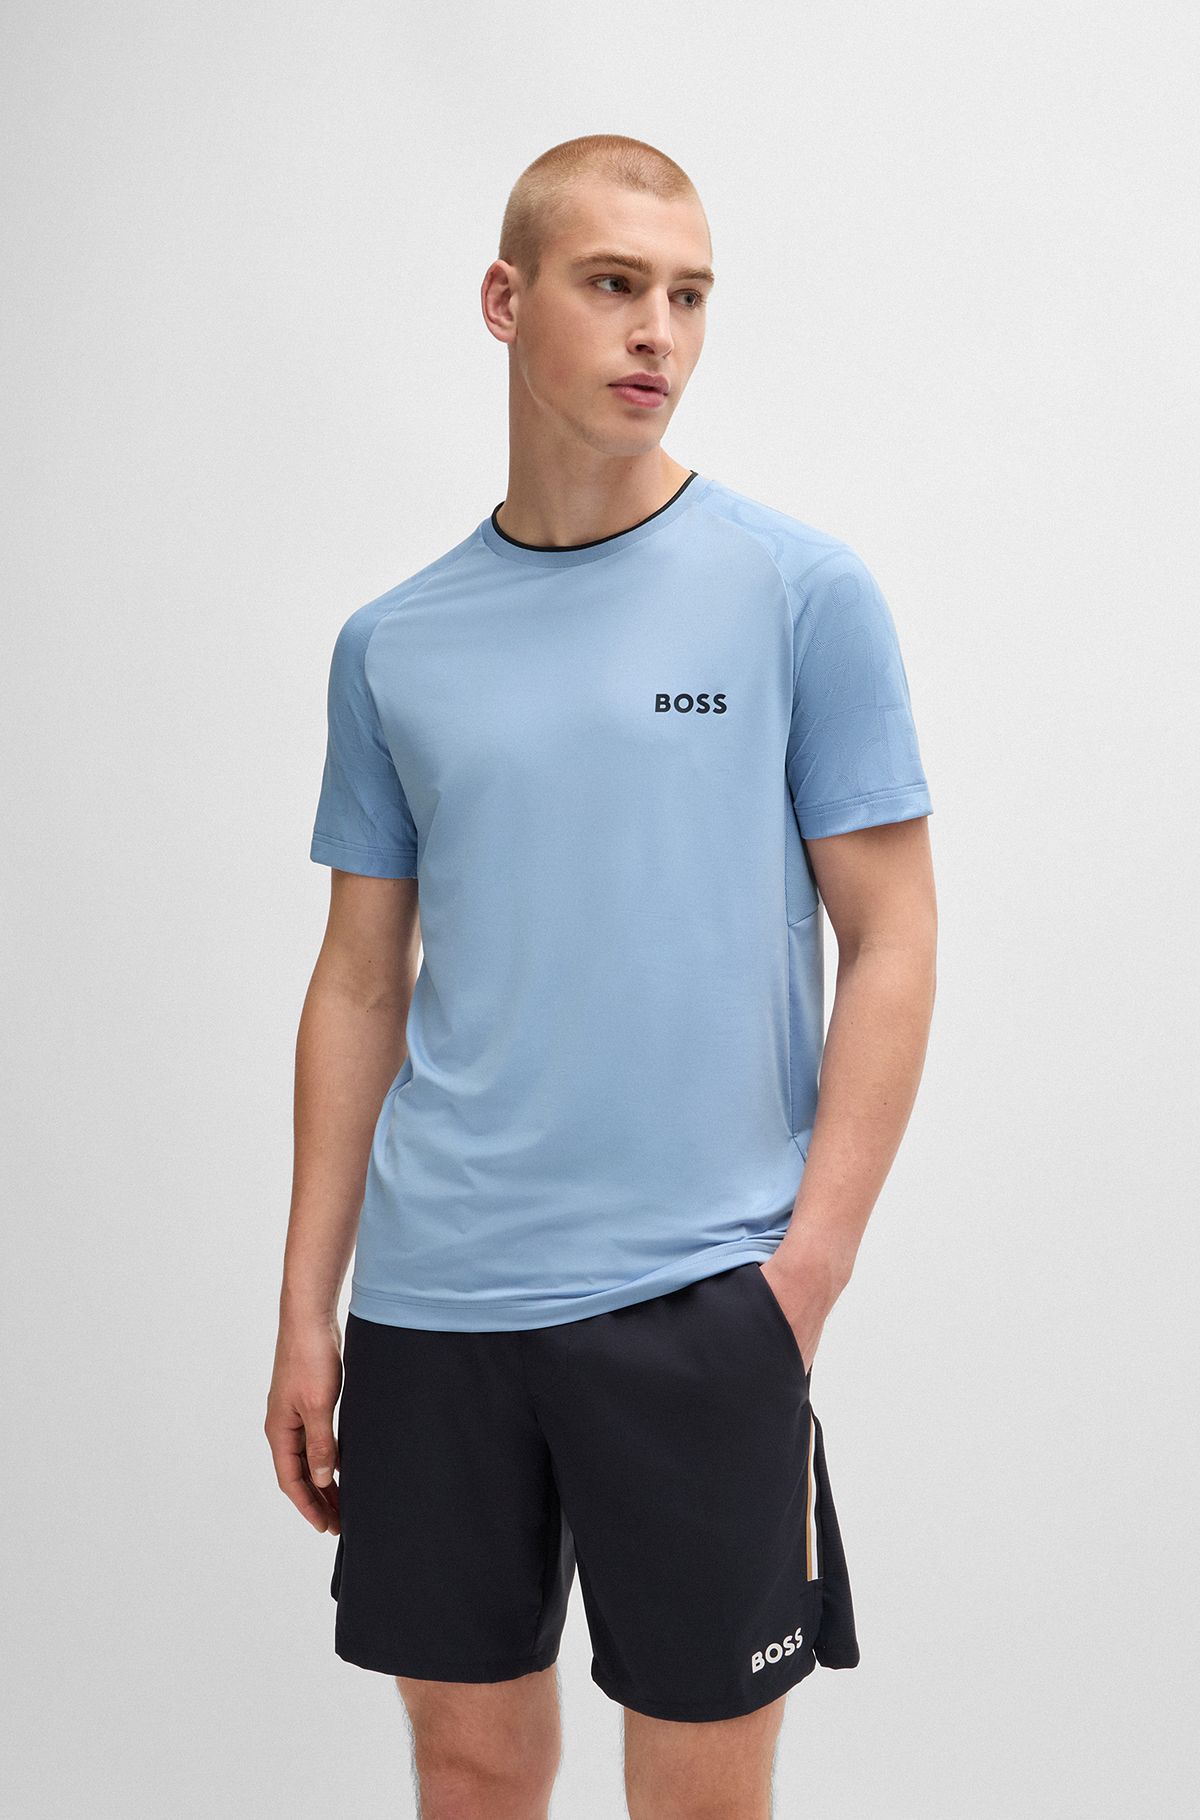 BOSS x Matteo Berrettini stretch-jersey T-shirt with signature details, Light Blue